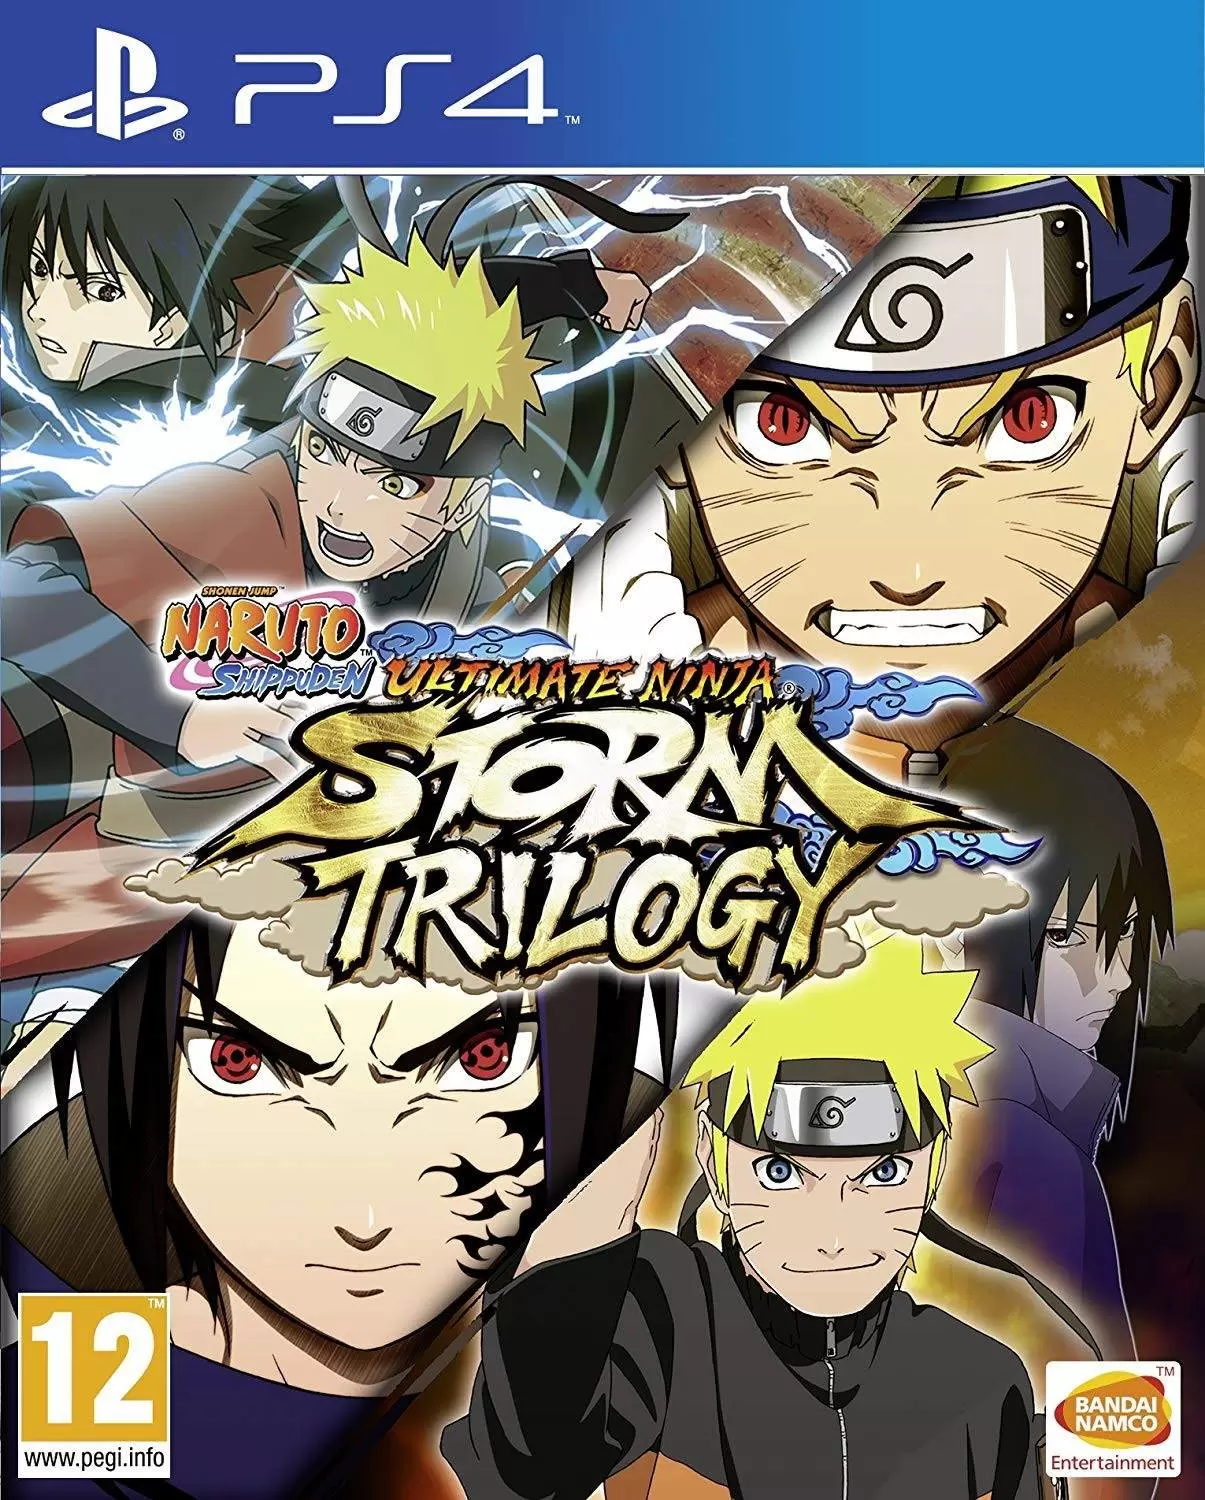 PS4 Games - Naruto Ultimate Ninja Storm Trilogy